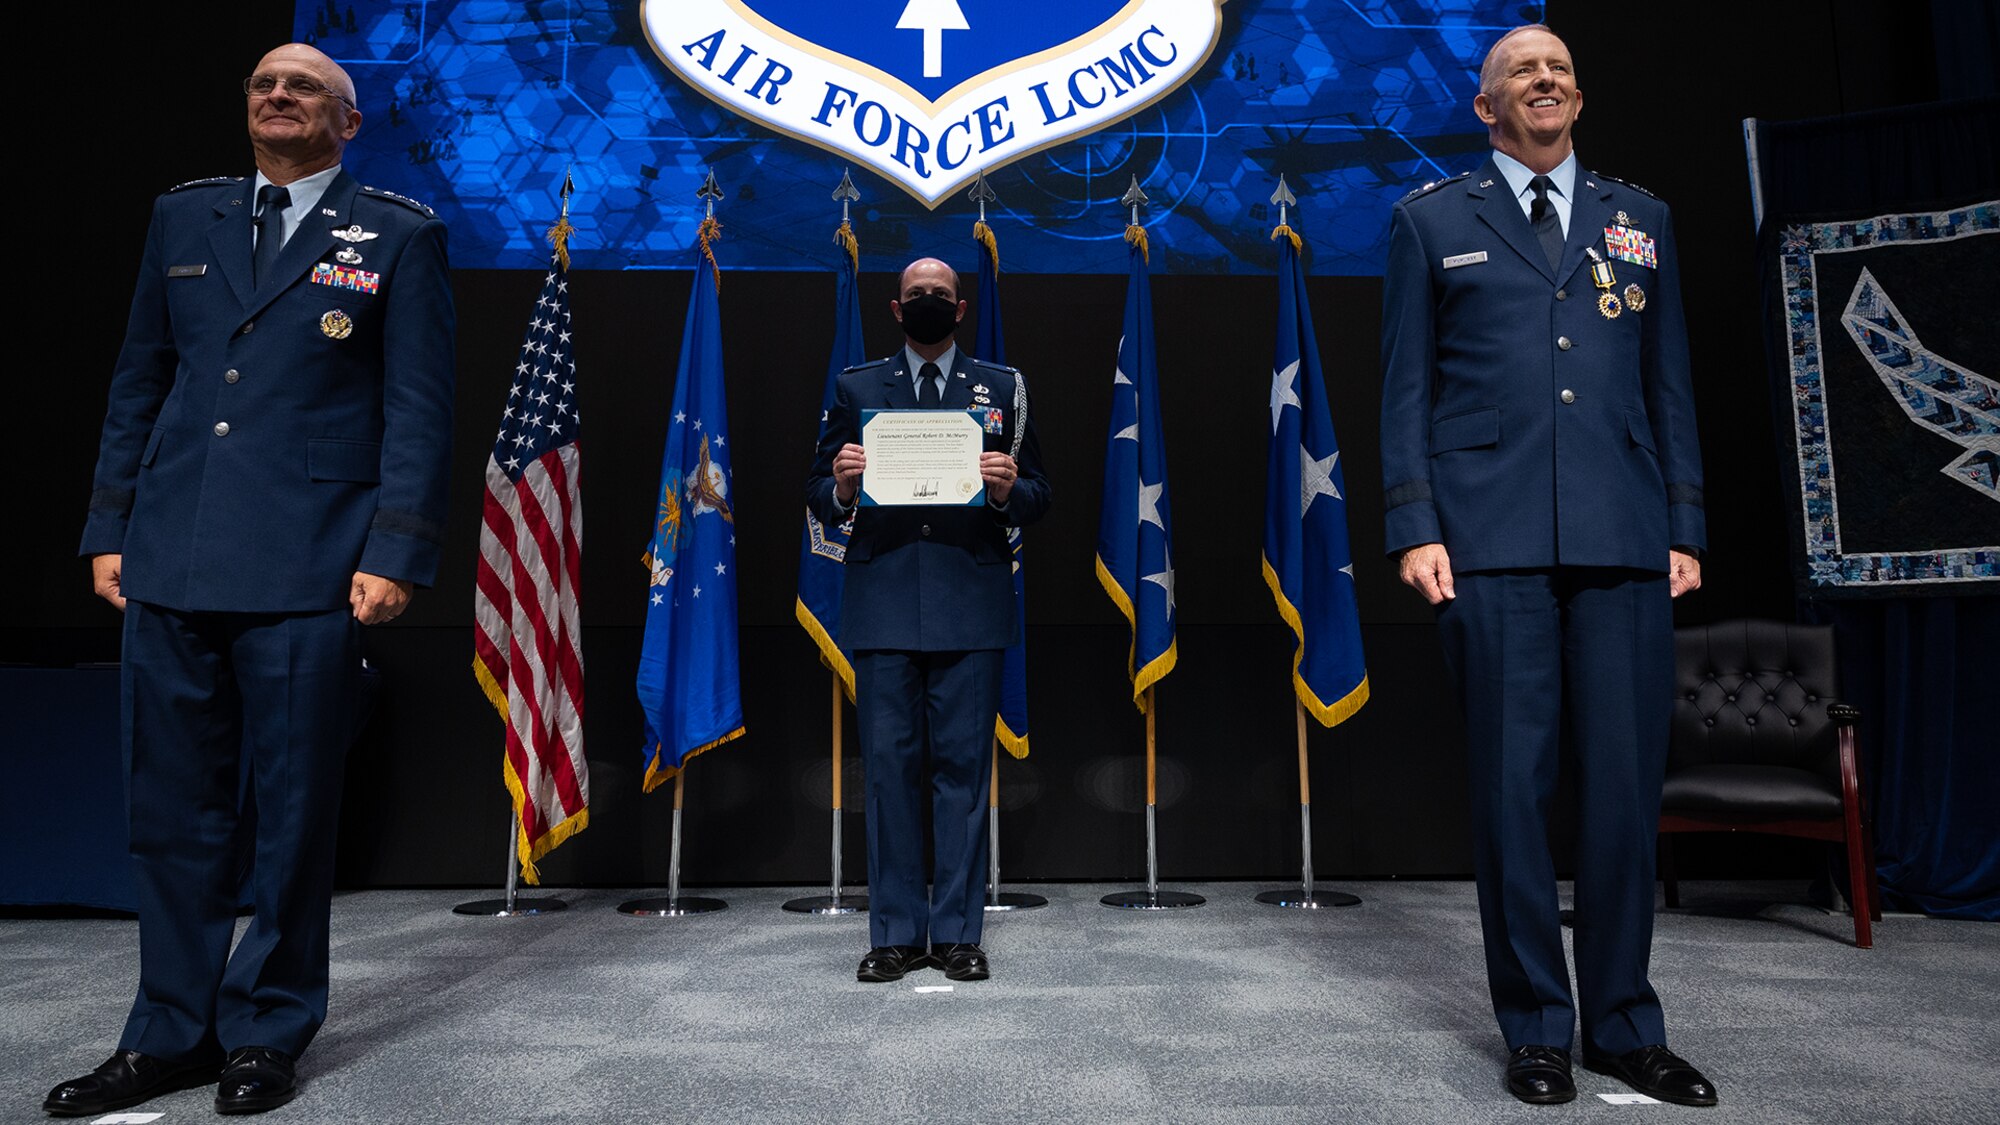 Lt. Gen. McMurry Retirement Ceremony